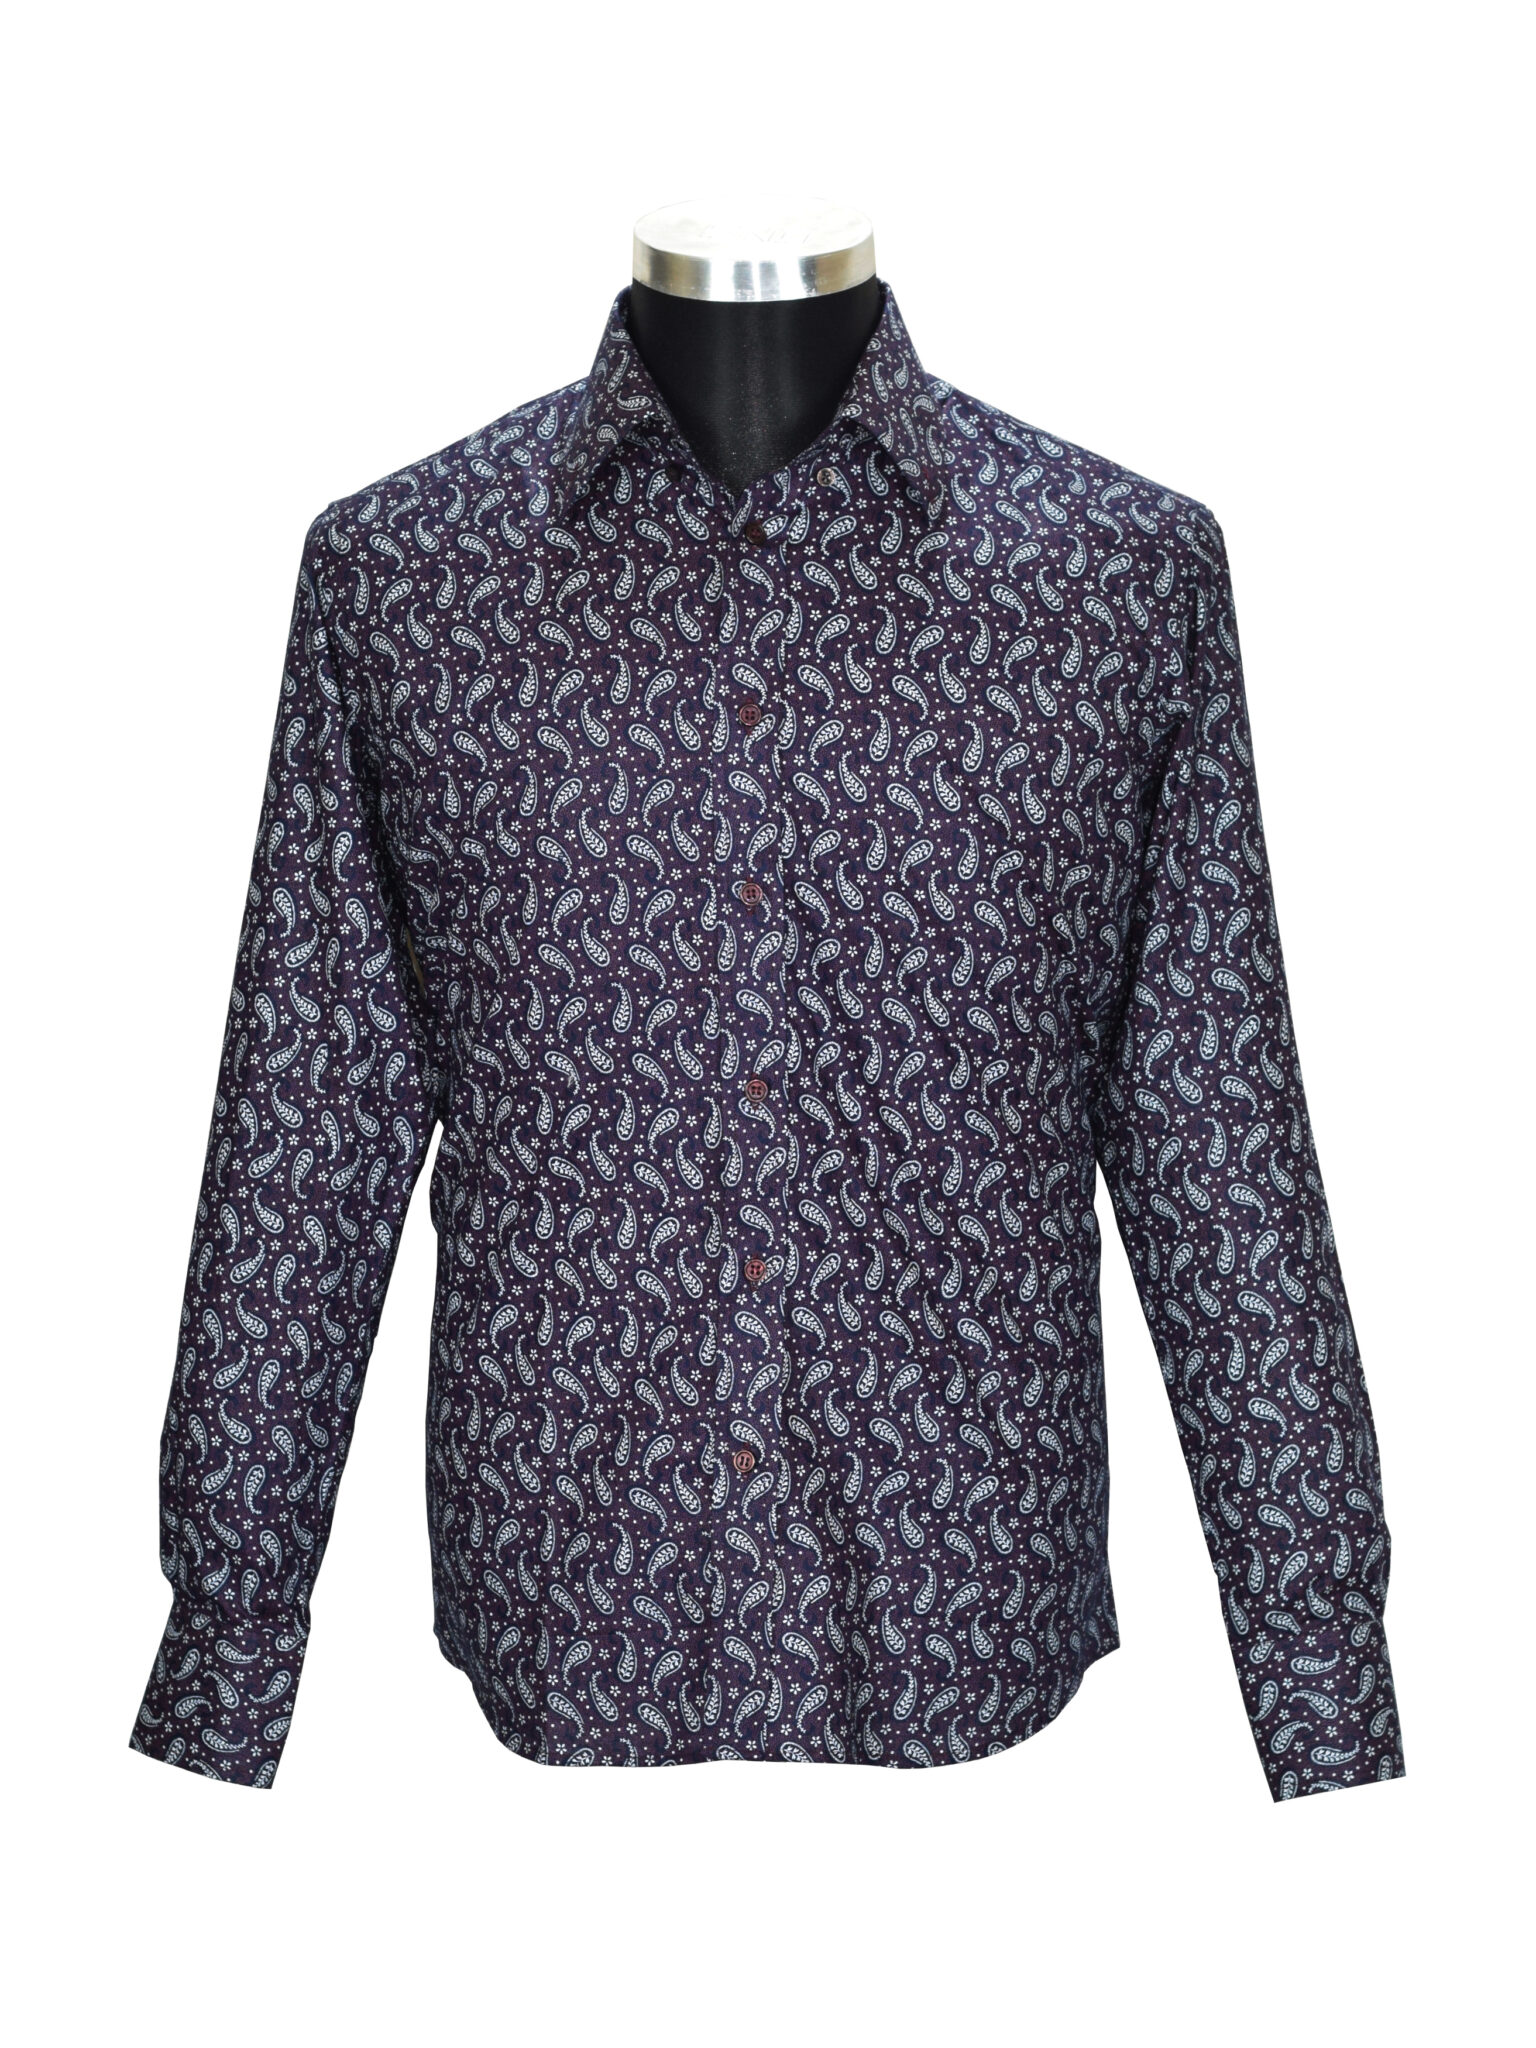 Men's Paisley Shirt | Retro Style Paisley Mod Shirt